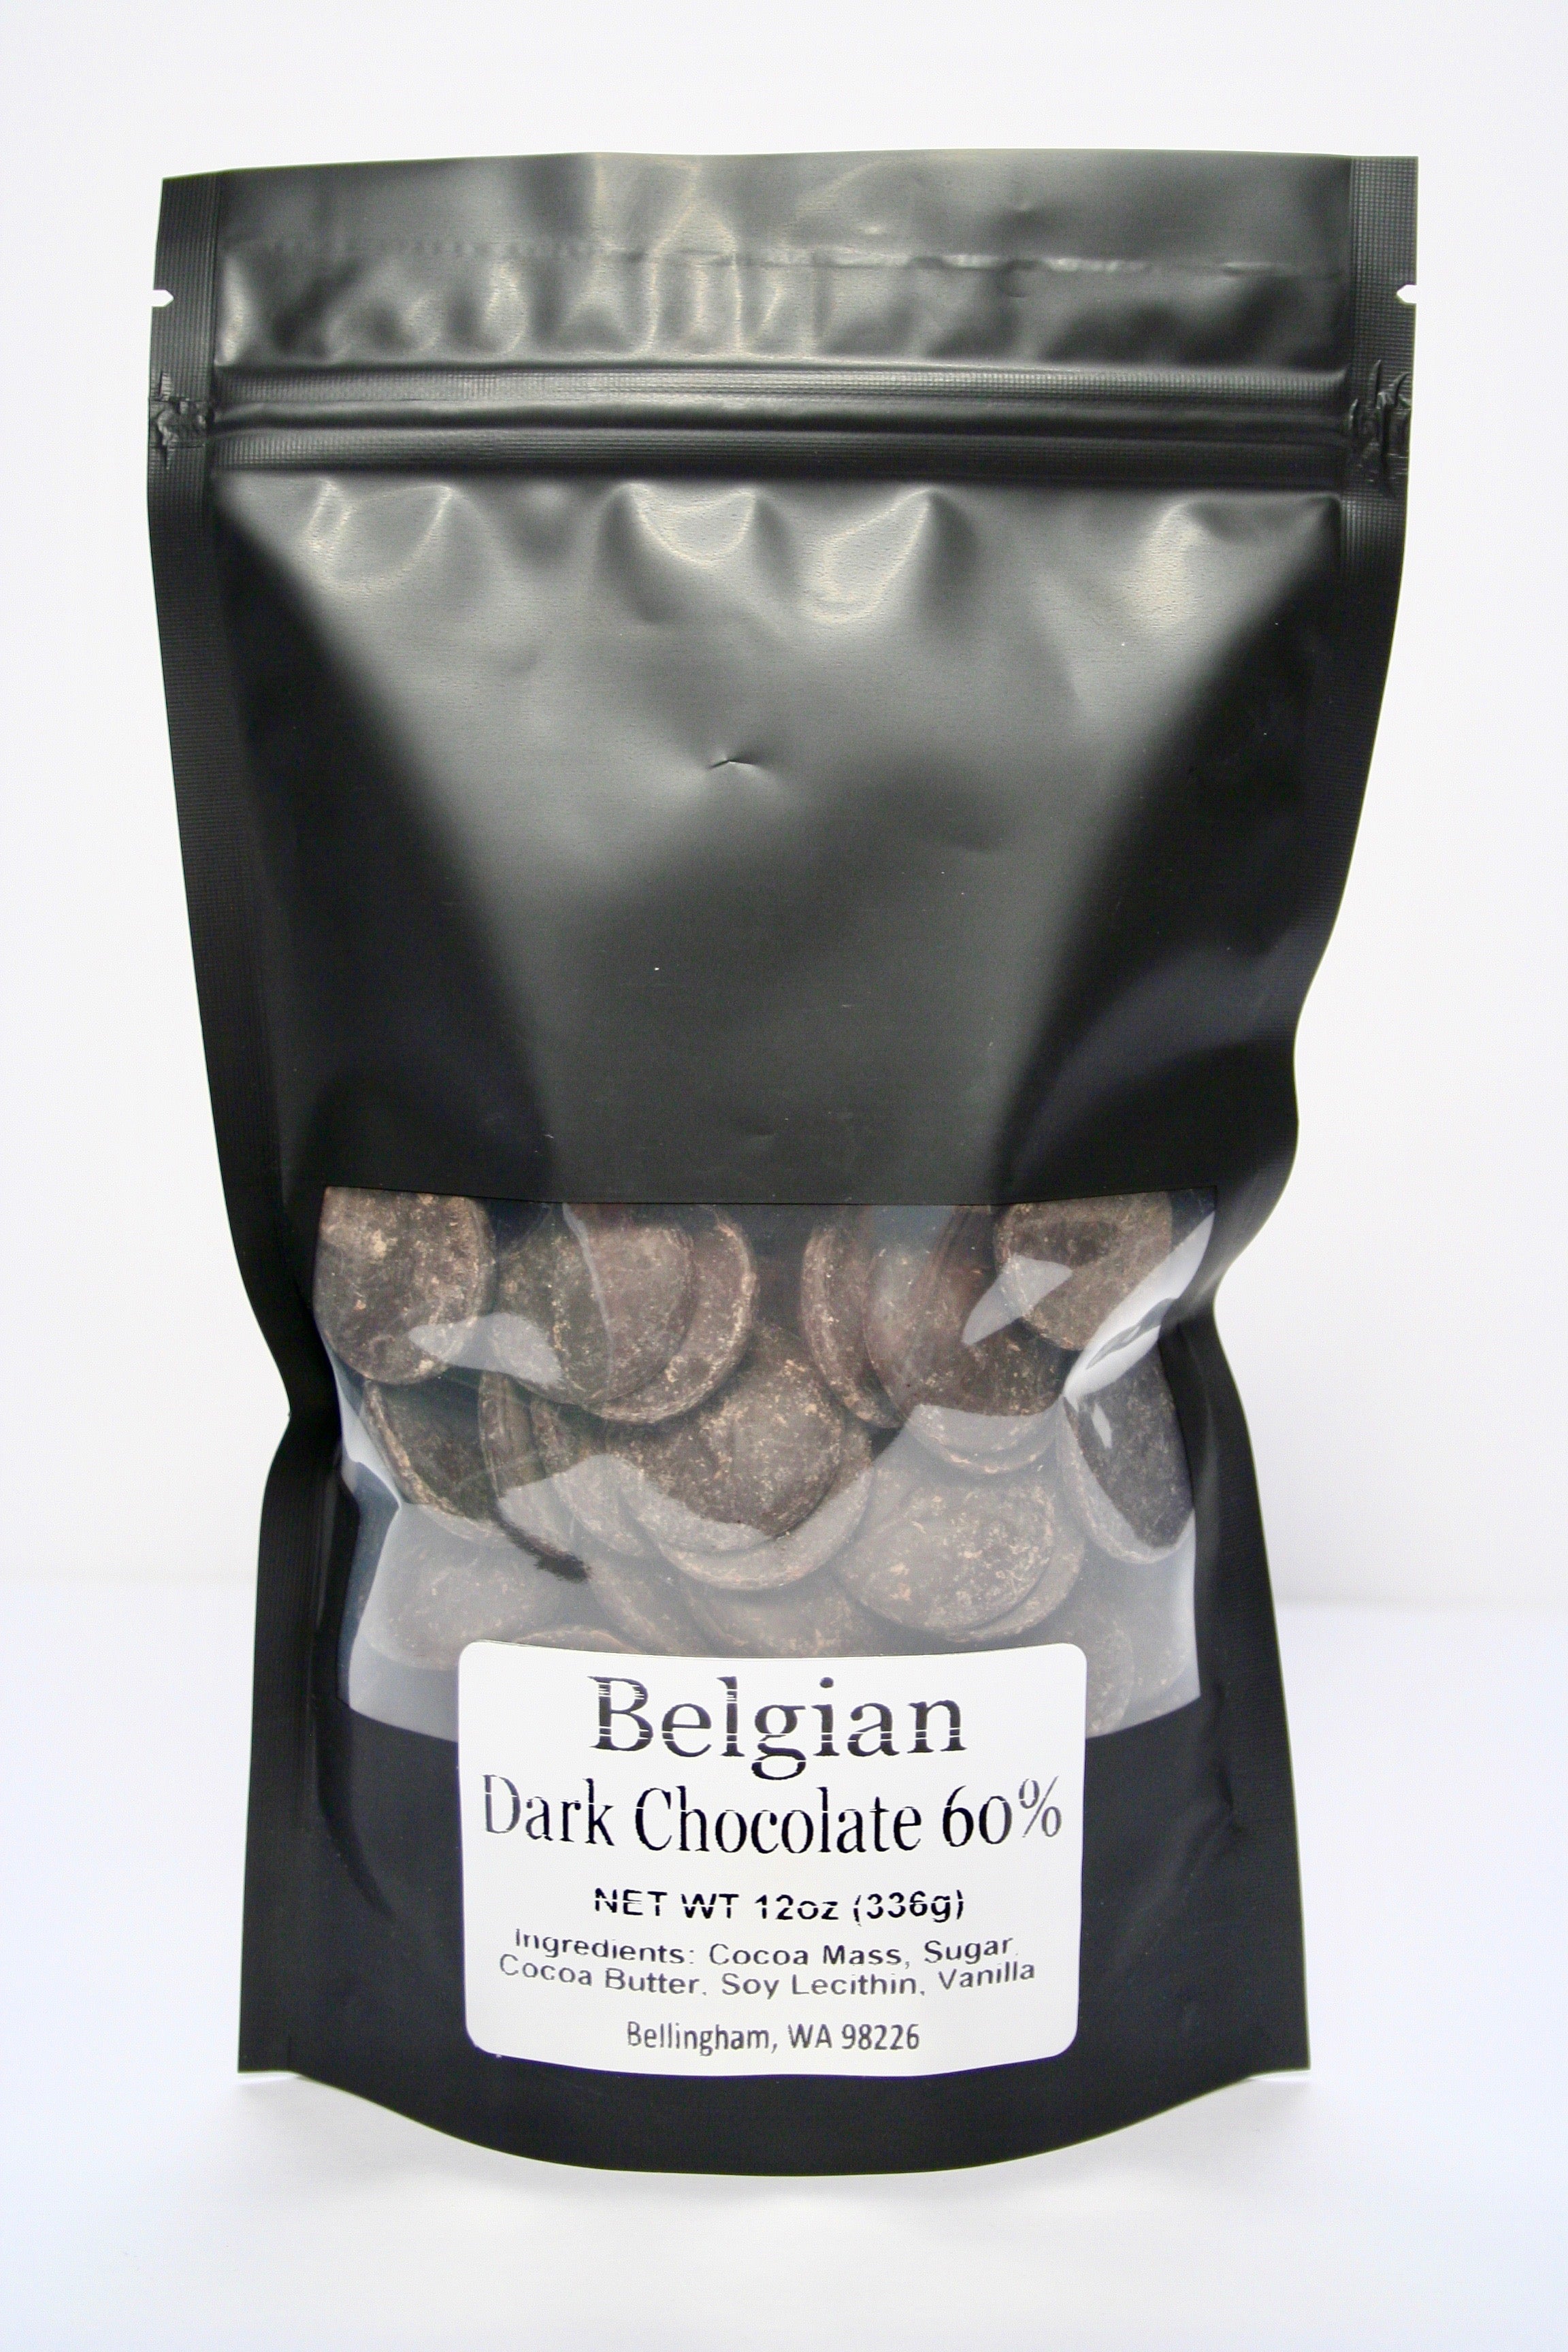 bag of dark chocolate chips